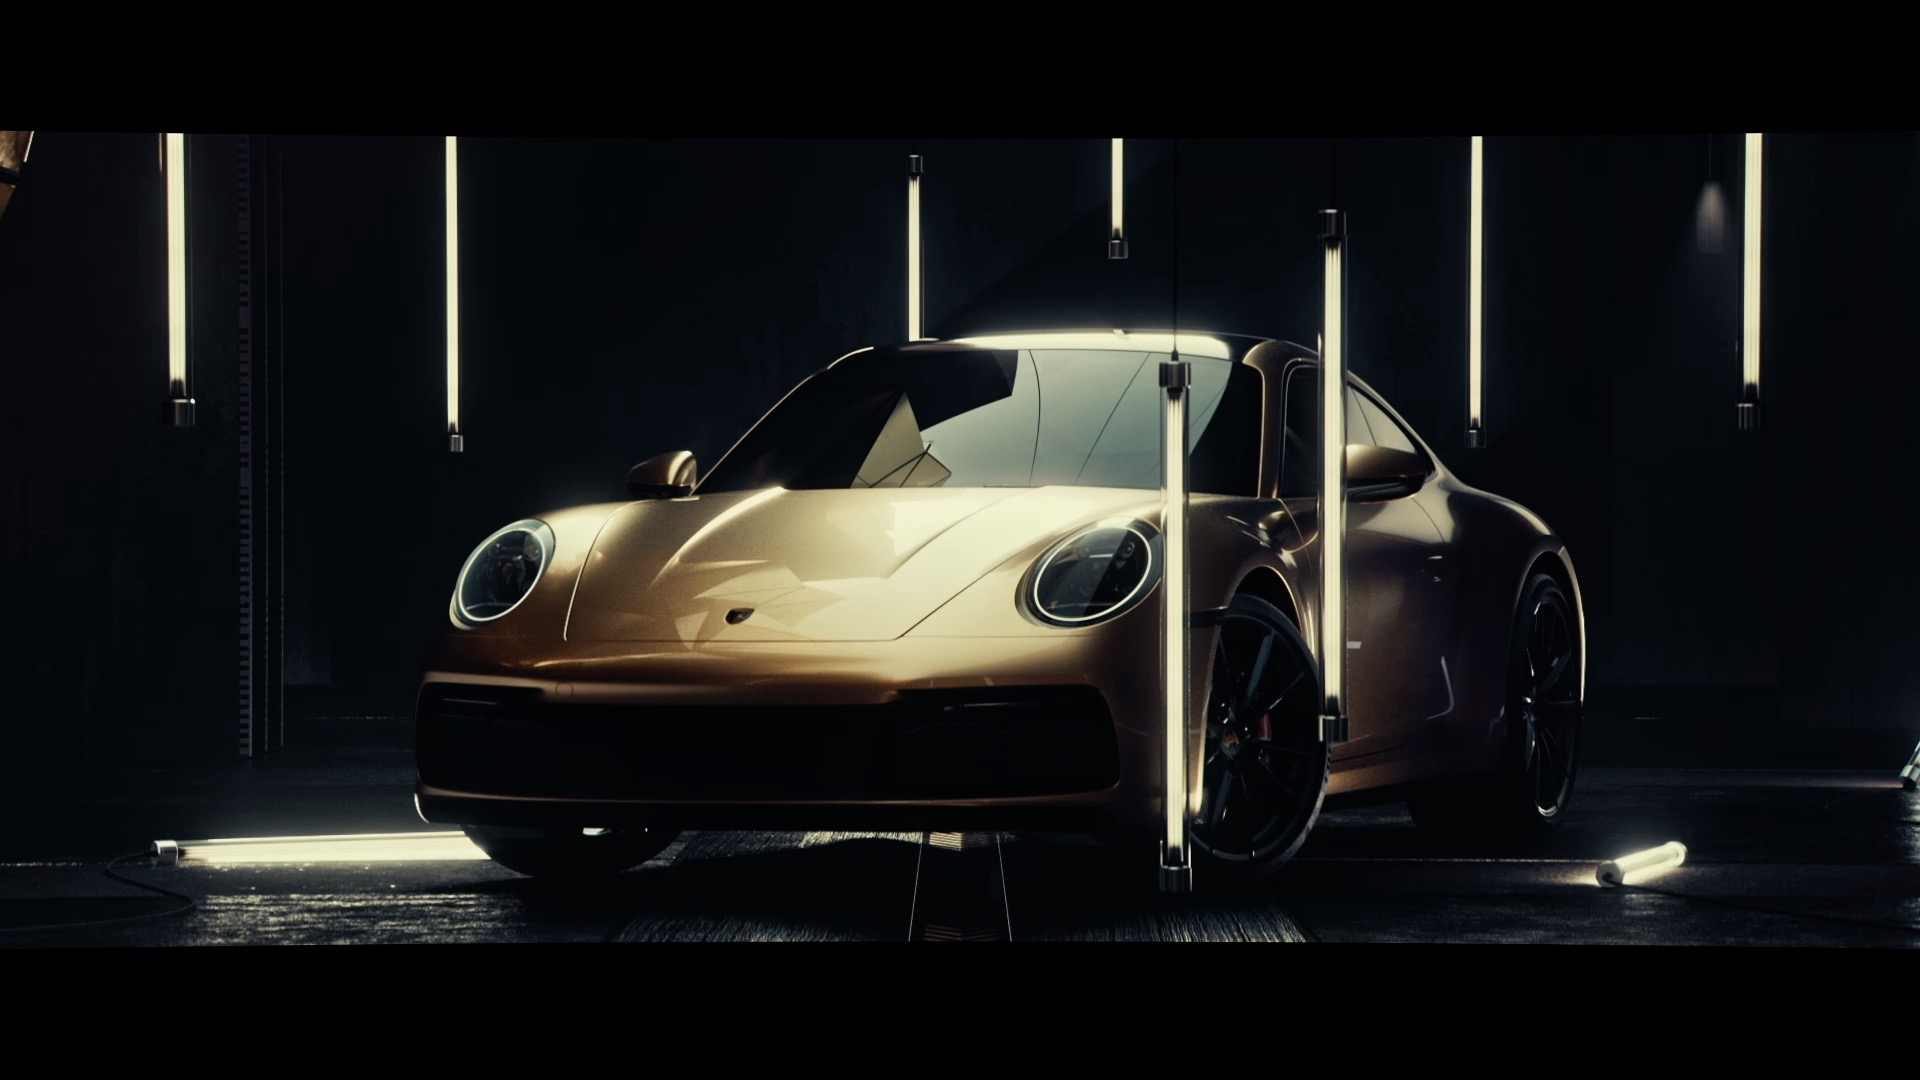 Porsche Animation | Full CG | Skillful camera work | 1st Festa, The films nominated.